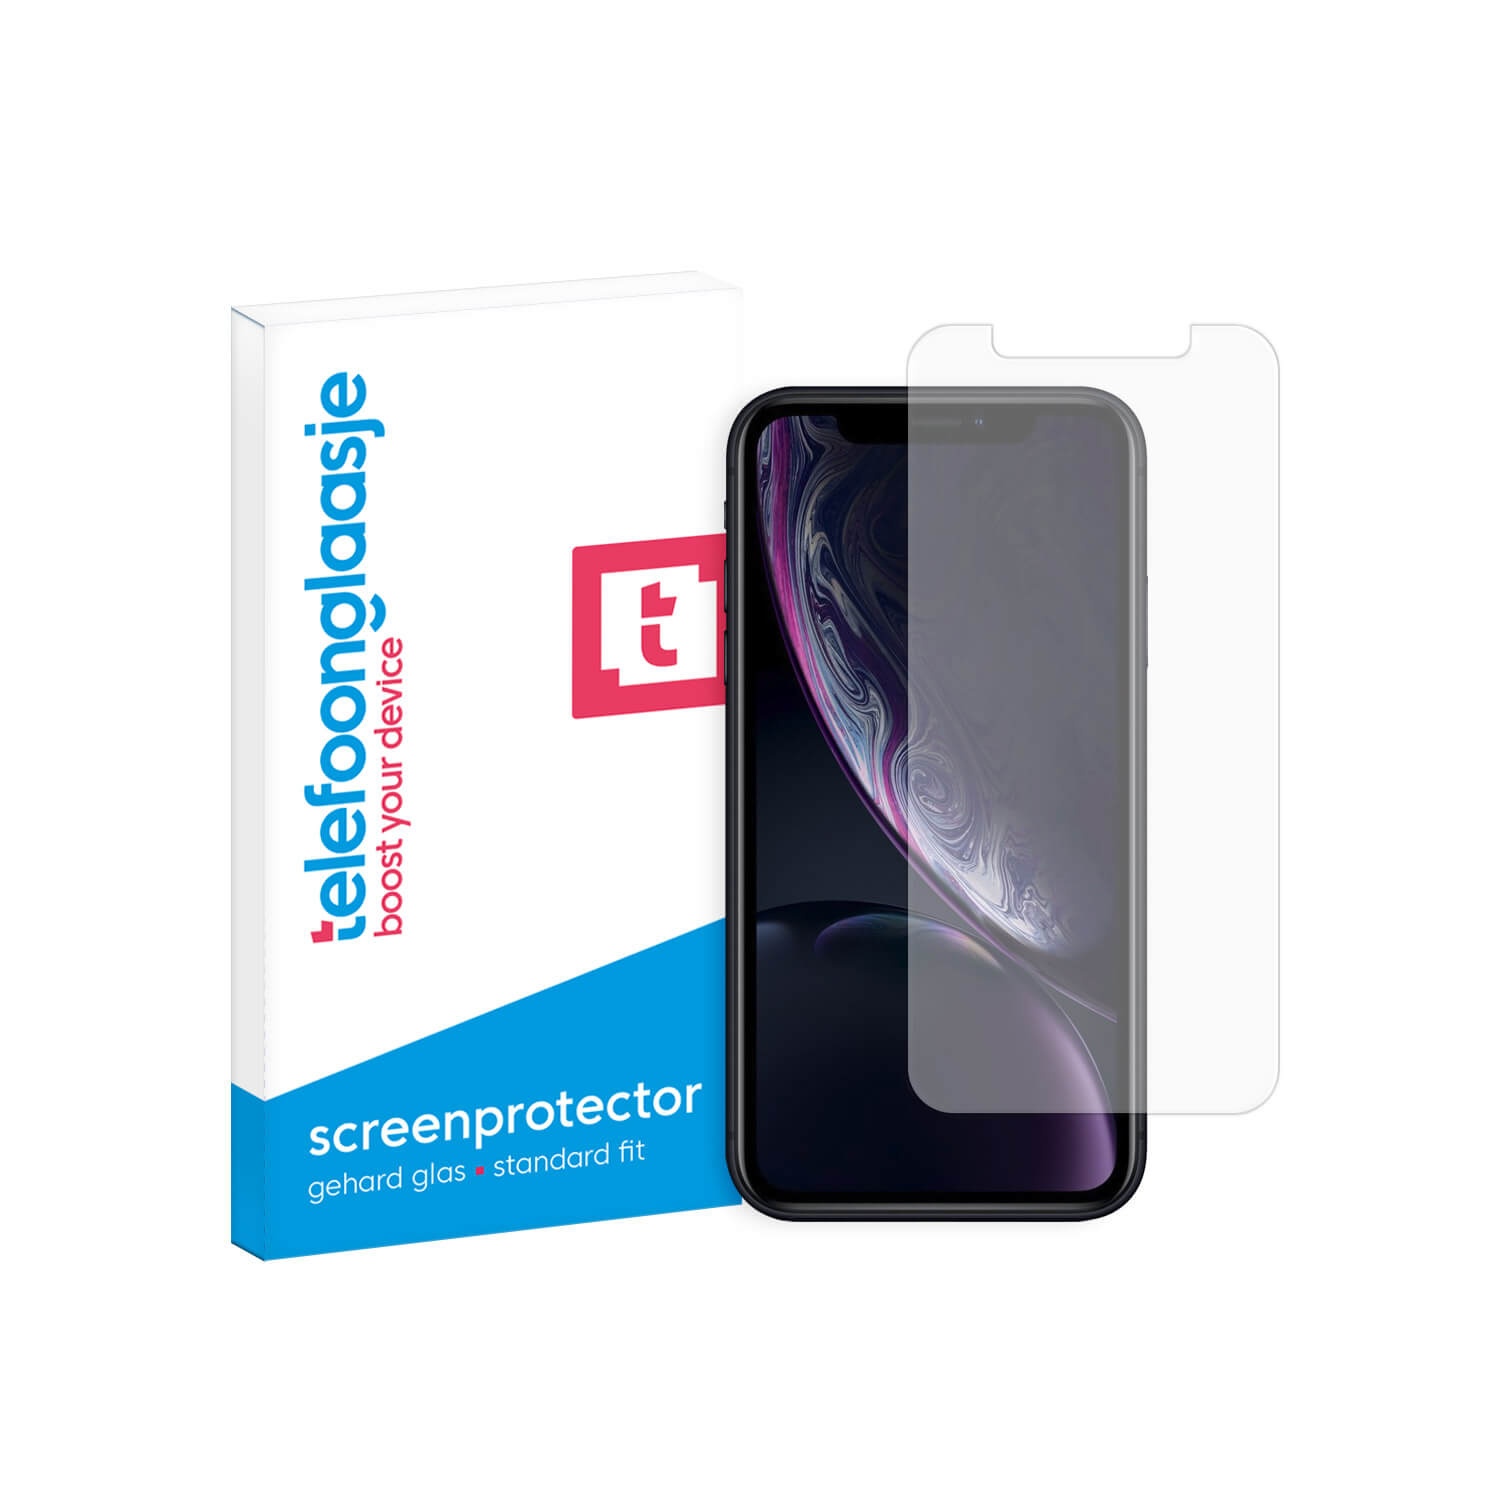 iPhone XR screenprotector gehard glas